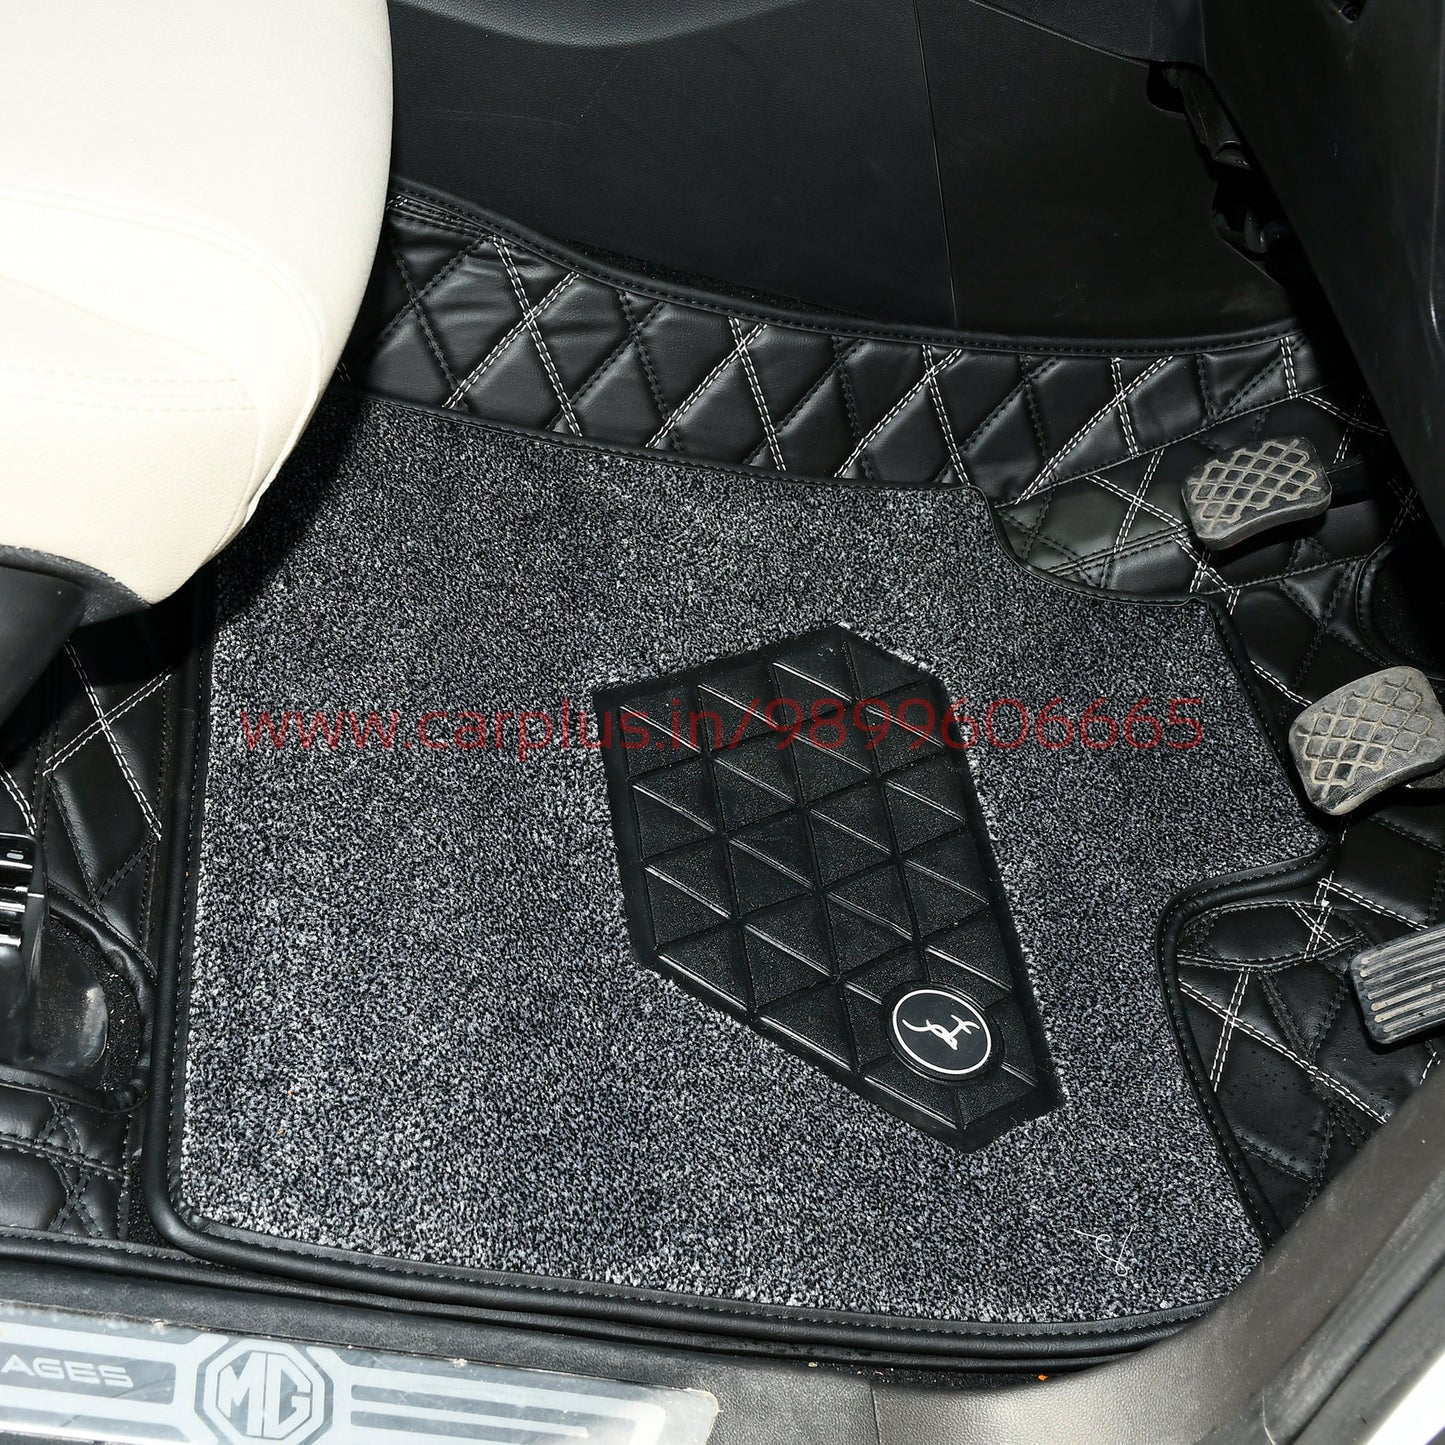 
                  
                    Top Gear 4D Pristine Coral Car Mats for MG Hector 5 MT-Crown Black(UM-Charcoal)-7D MATS-KMH-CARPLUS
                  
                